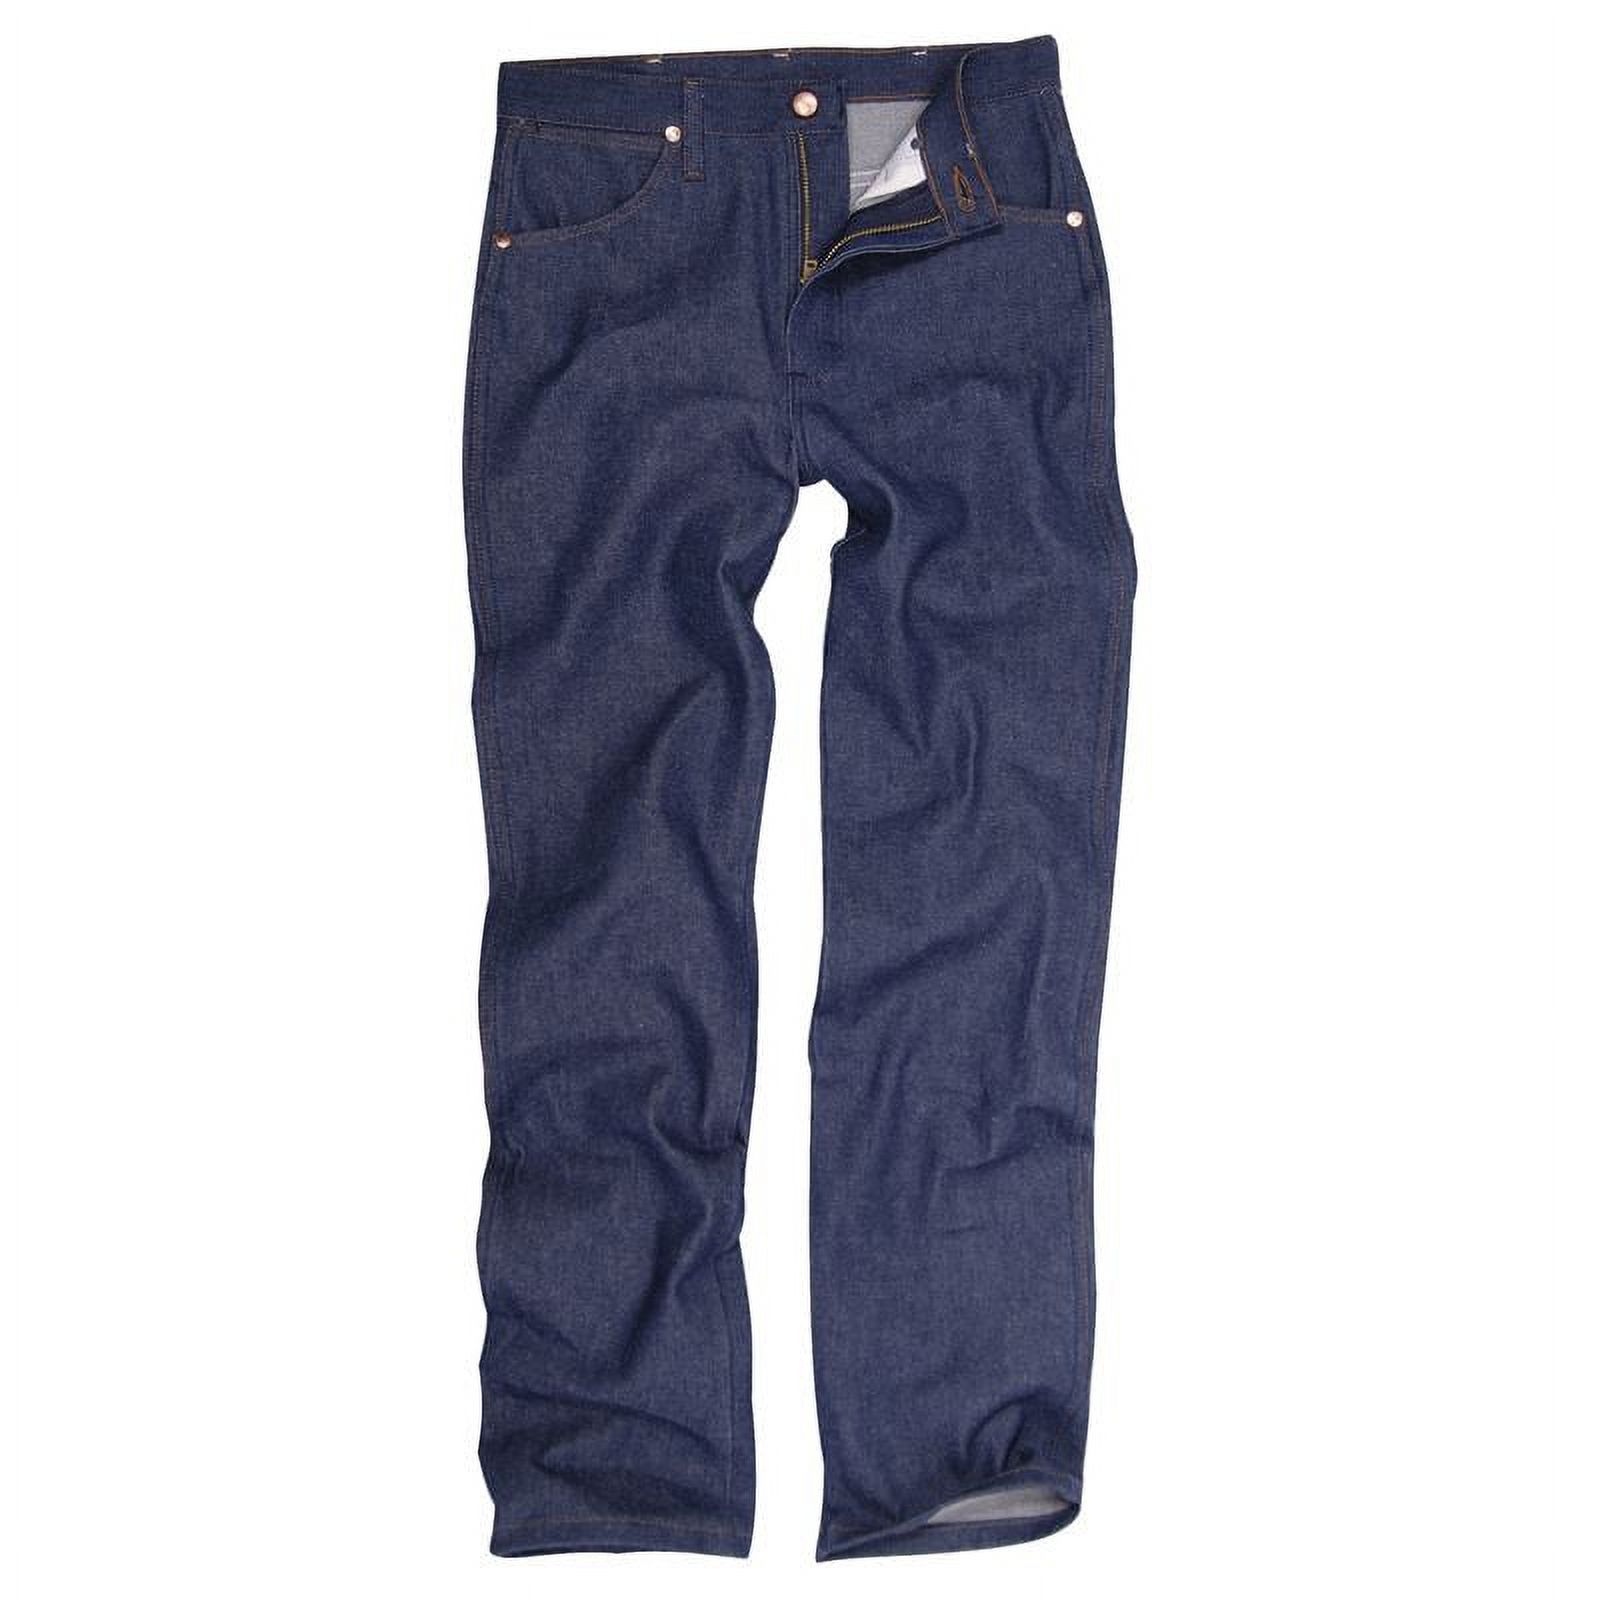 Wrangler Apparel Mens Slim Fit Cowboy Cut Jeans - image 1 of 3